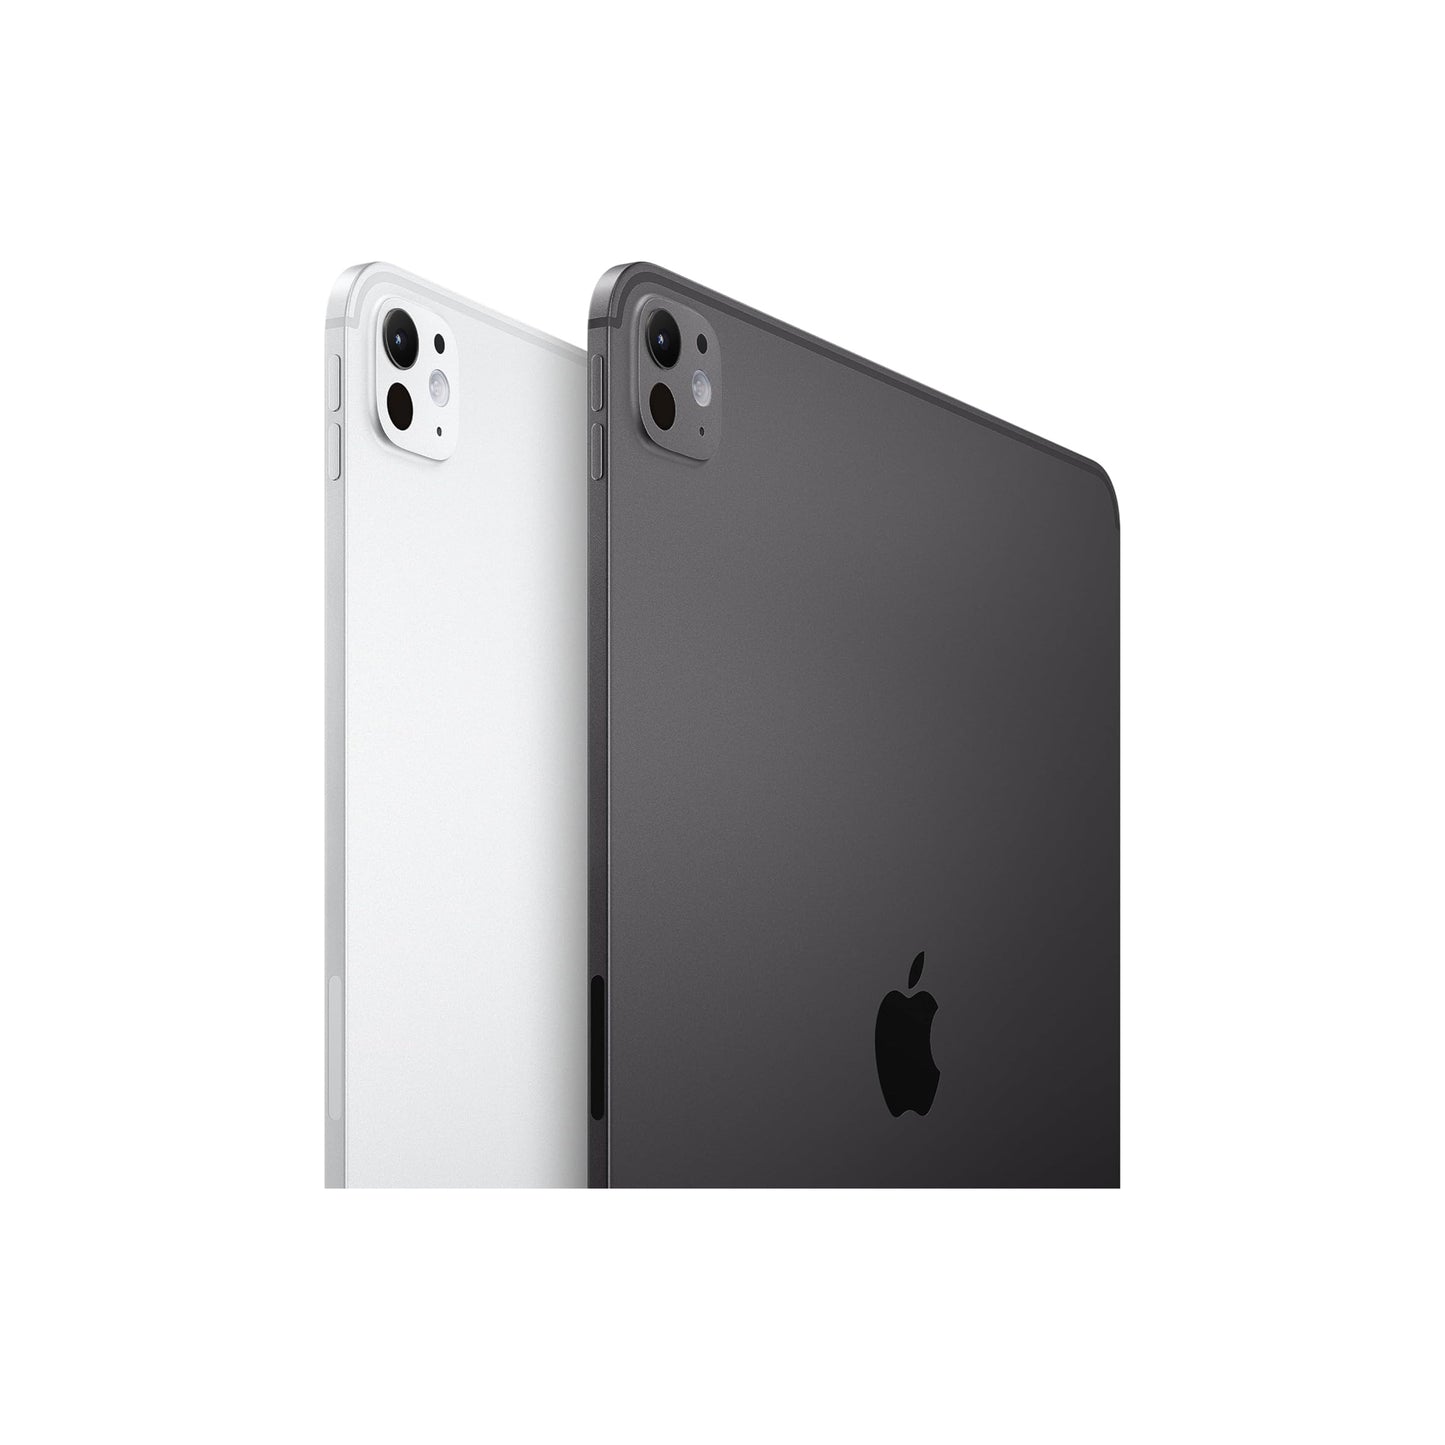 Apple iPad Pro 11 بوصة (M4): شاشة Ultra Retina XDR، 512 جيجابايت، كاميرا أمامية 12 ميجابكسل / كاميرا خلفية 12 ميجابكسل، ماسح ضوئي LiDAR، شبكة Wi-Fi 6E + 5G خلوية مع eSIM، عمر بطارية يدوم طوال اليوم - أسود فلكي